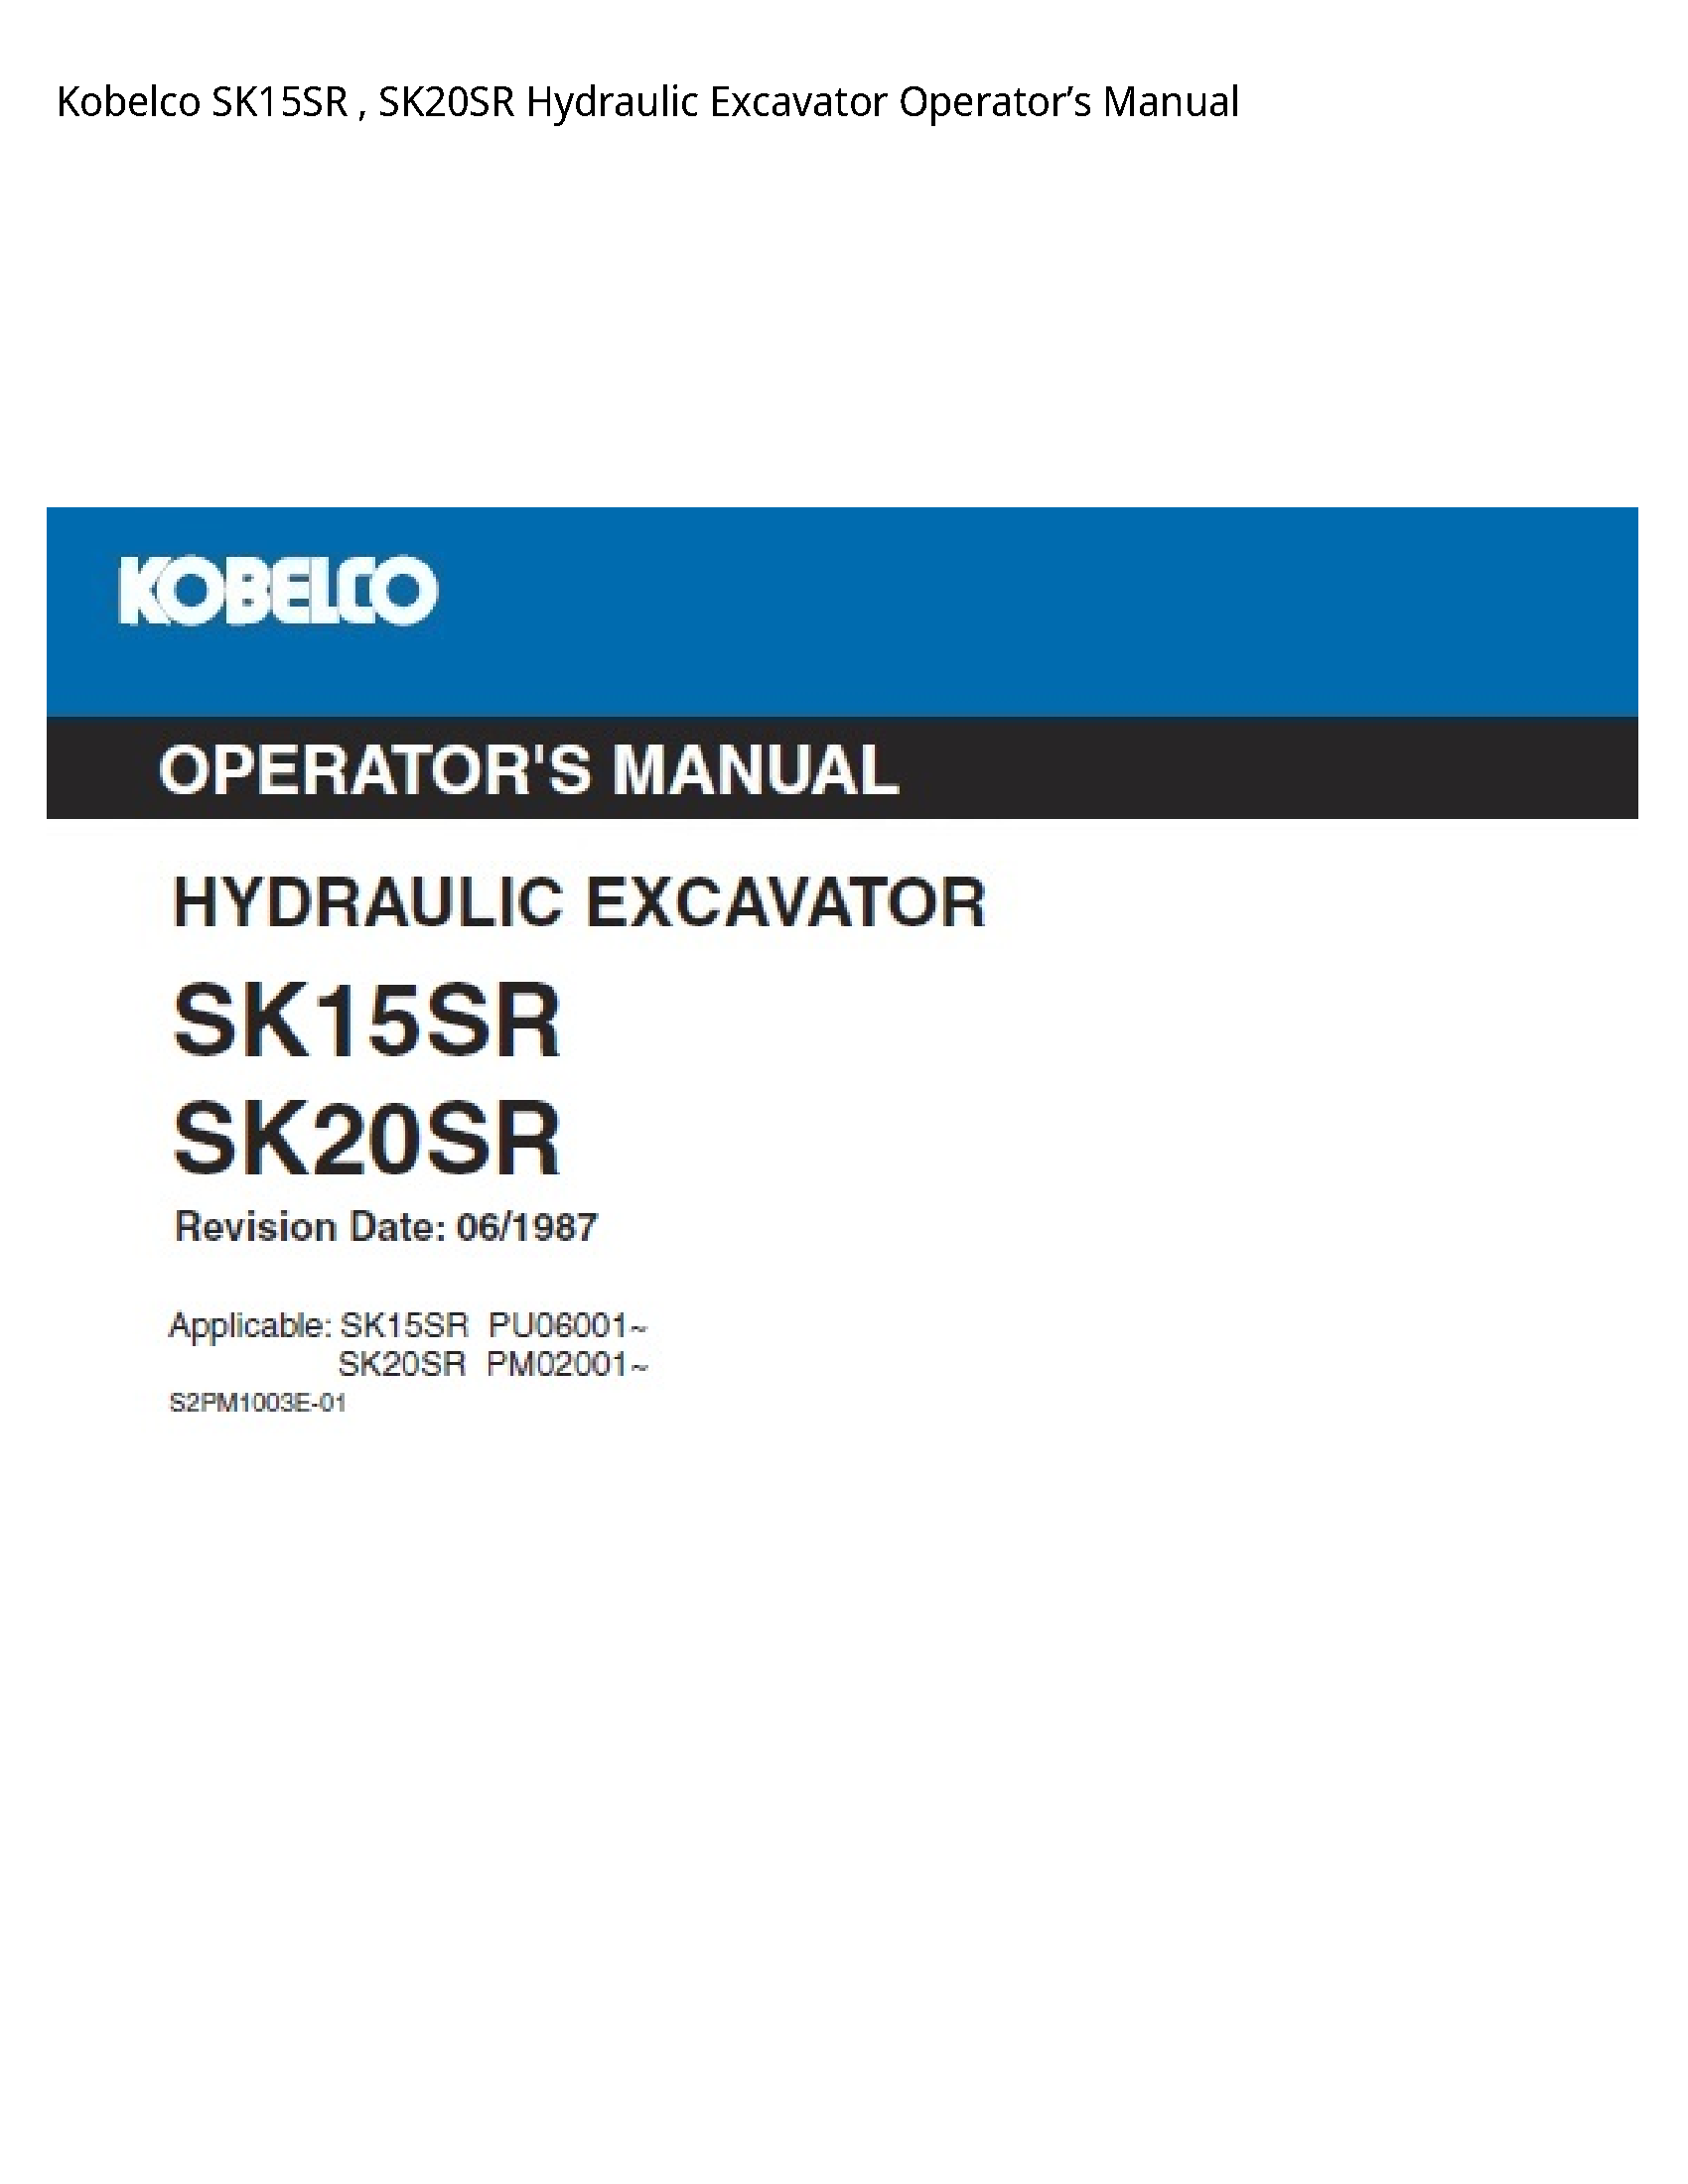 Kobelco SK15SR Hydraulic Excavator Operator’s manual